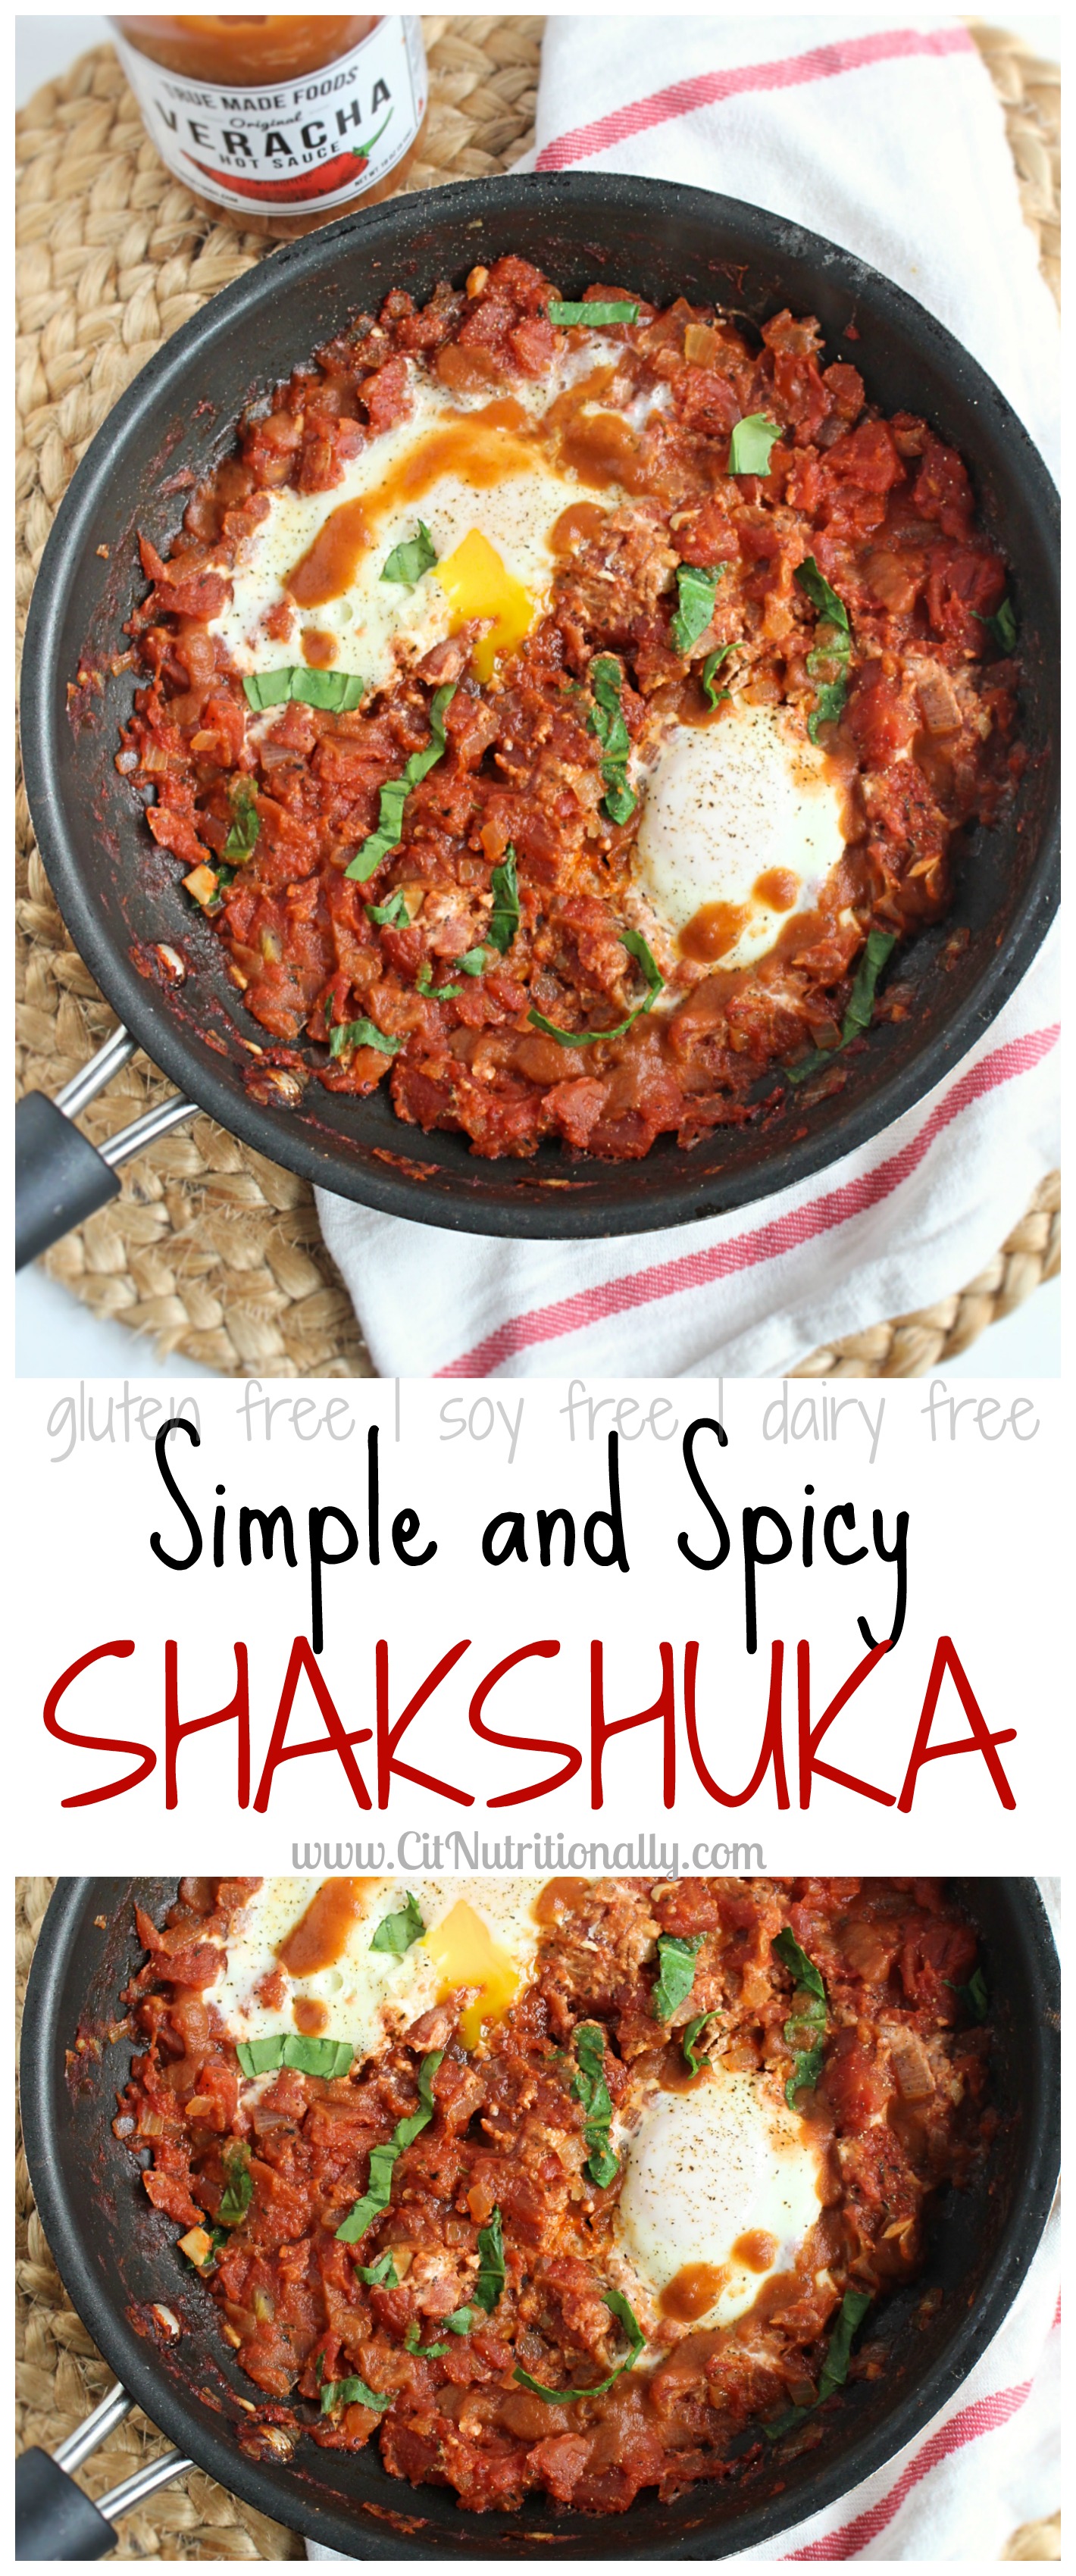 Simple and Spicy Shakshuka | C it Nutritionally #sponsored #brunch #breakfast #healthyeating